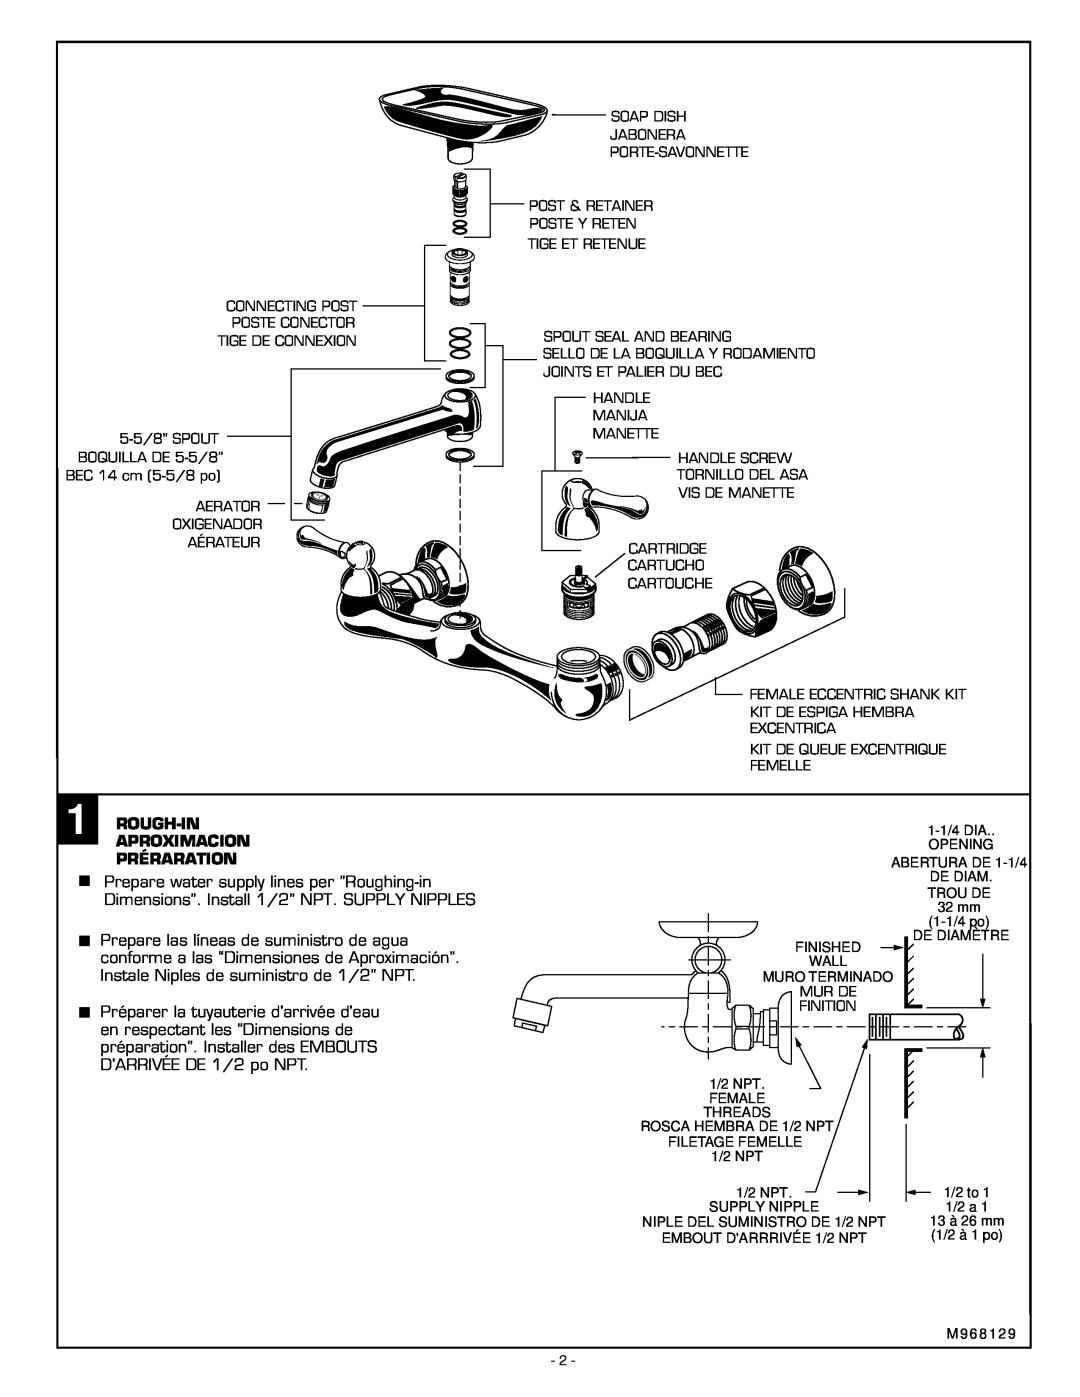 American Standard 7295 Series installation instructions Rough-Inaproximacion Préraration 